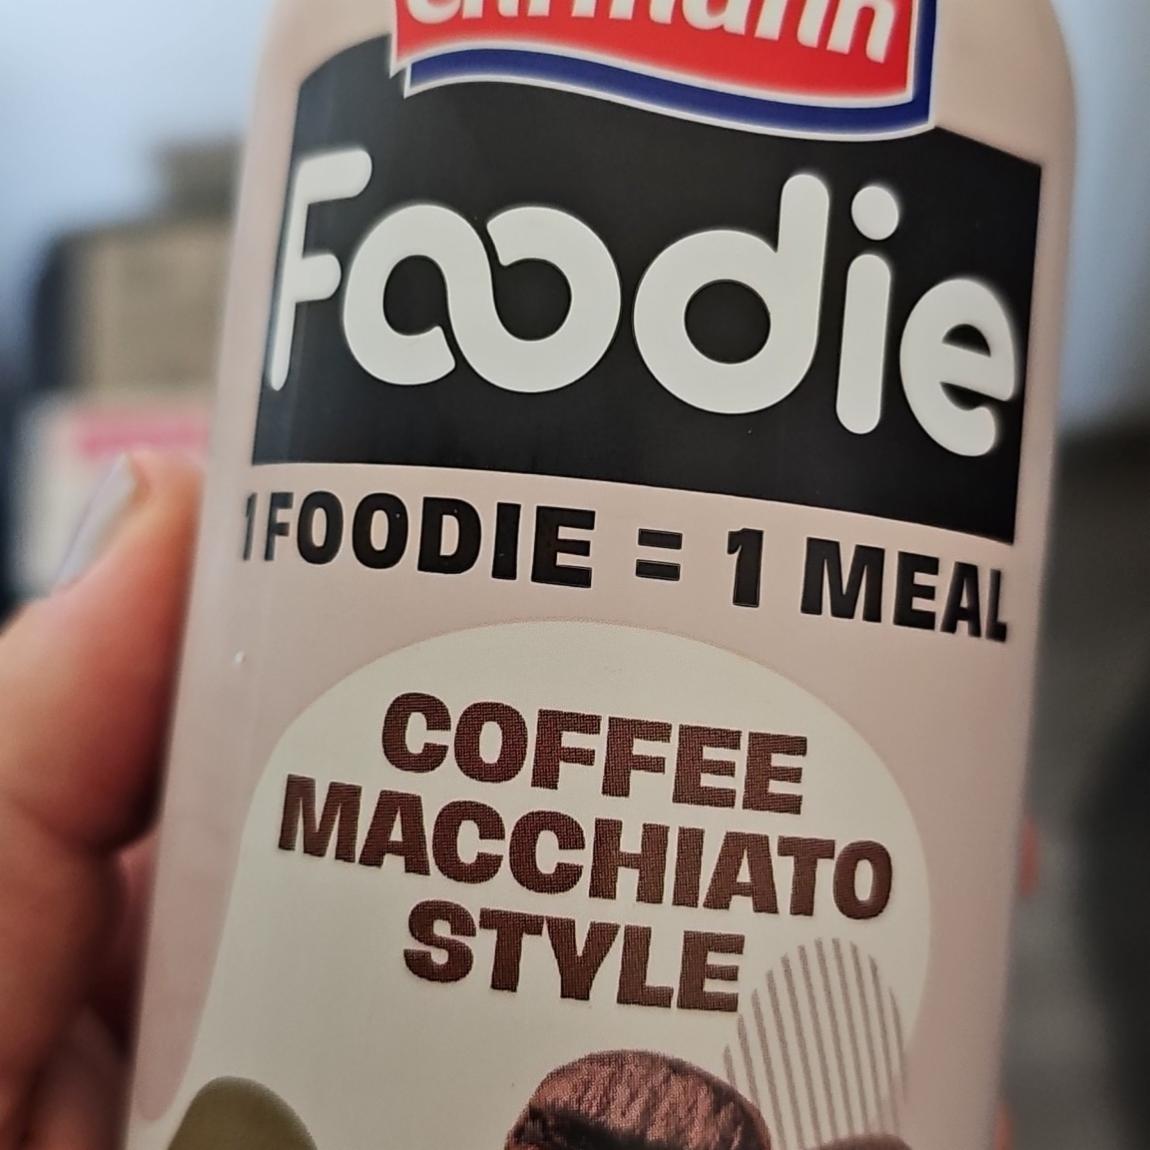 Fotografie - Foodie Coffee Macchiato Style Ehrmann